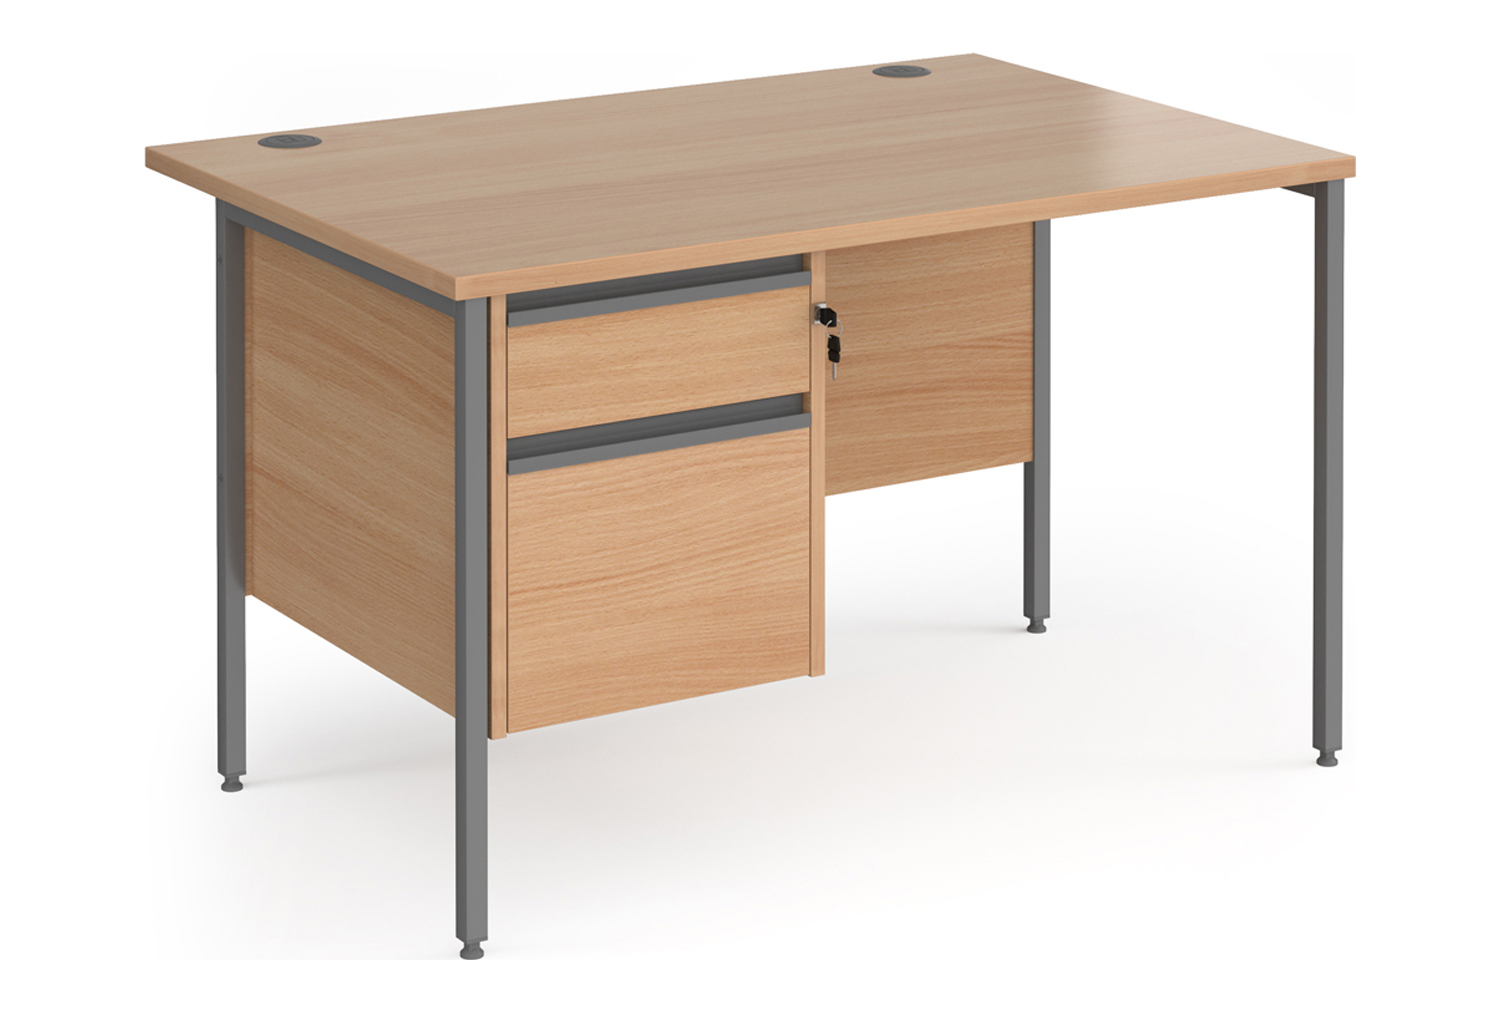 Value Line Classic+ Rectangular H-Leg Office Desk 2 Drawers (Graphite Leg), 120wx80dx73h (cm), Beech, Express Delivery